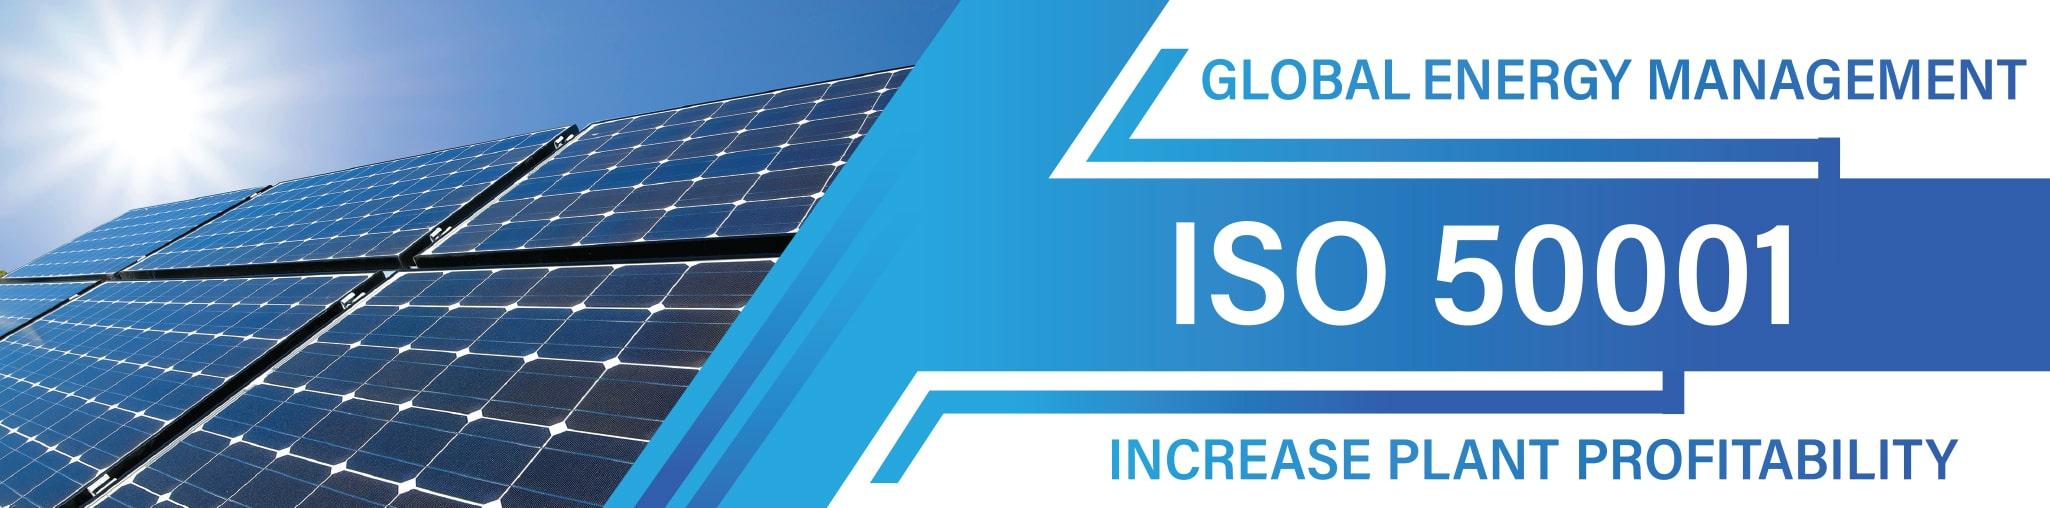 Global Energy Management ISO 50001